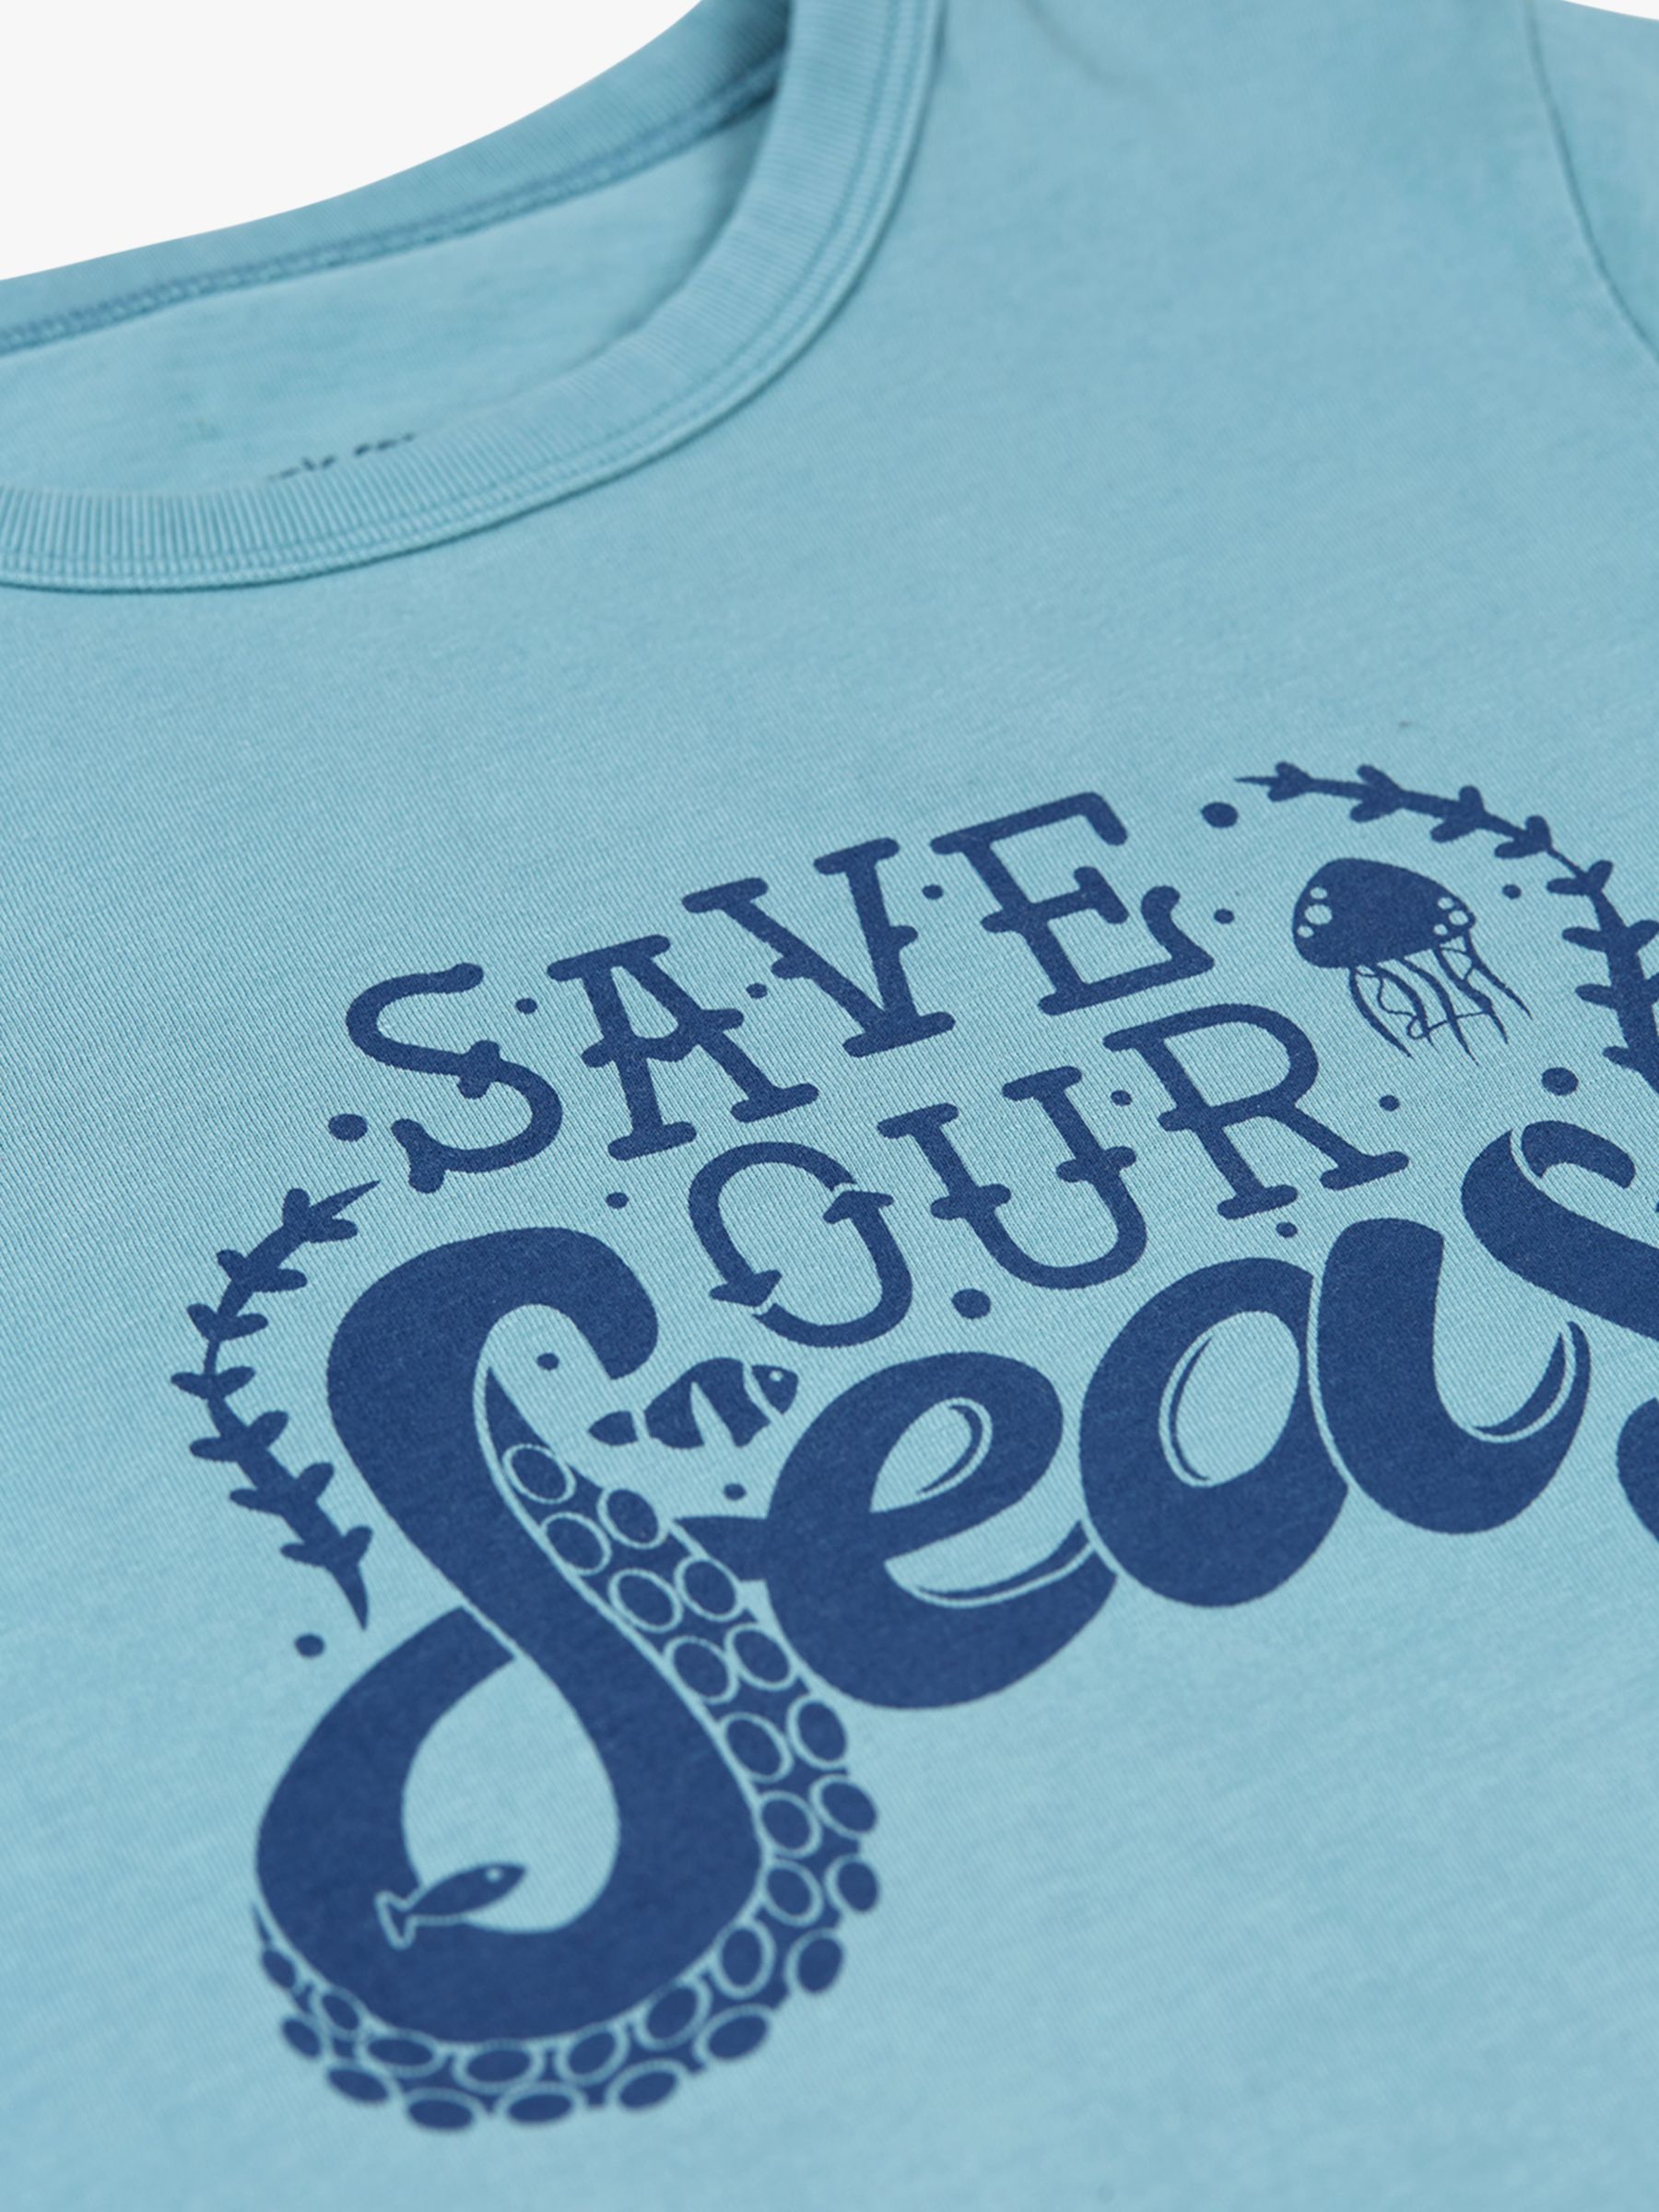 Buy Frugi Kids' Tea Organic Cotton Save Our Seas T-Shirt, Sea Blue Online at johnlewis.com